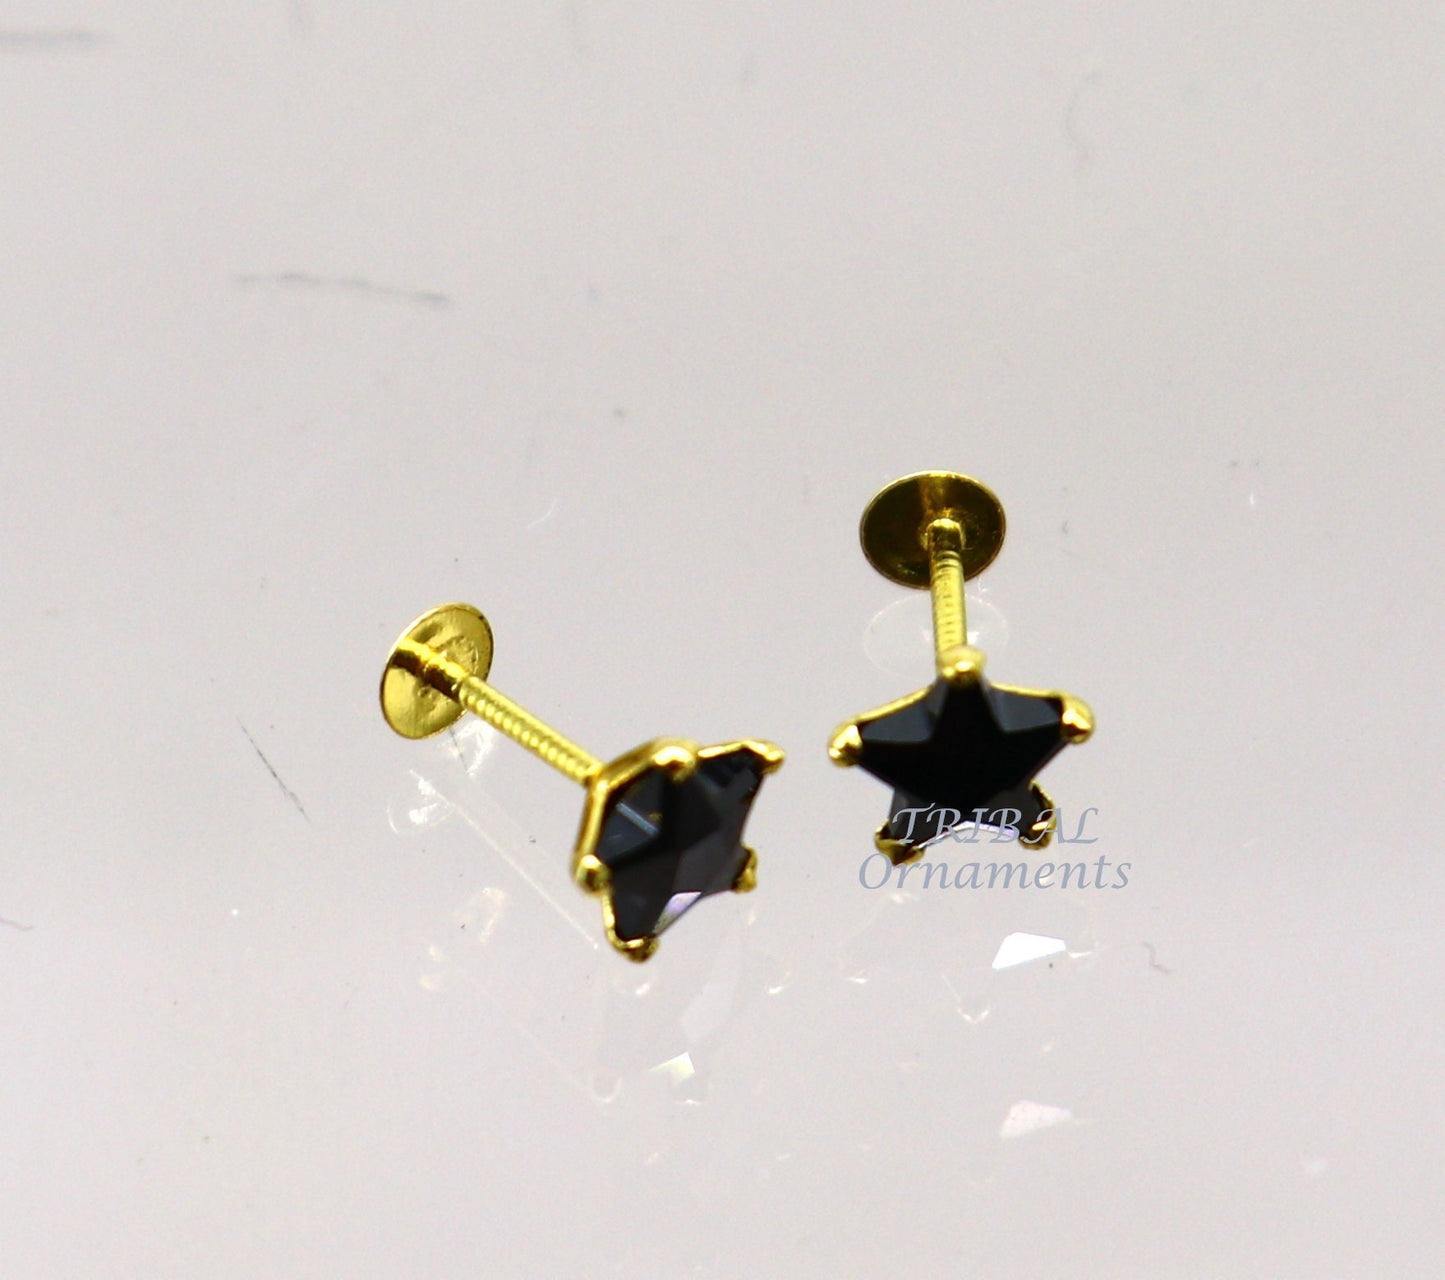 5mm 18kt yellow gold handmade single black stone back screw Star shape stud earring cartilage customized unisex jewelry er142 - TRIBAL ORNAMENTS